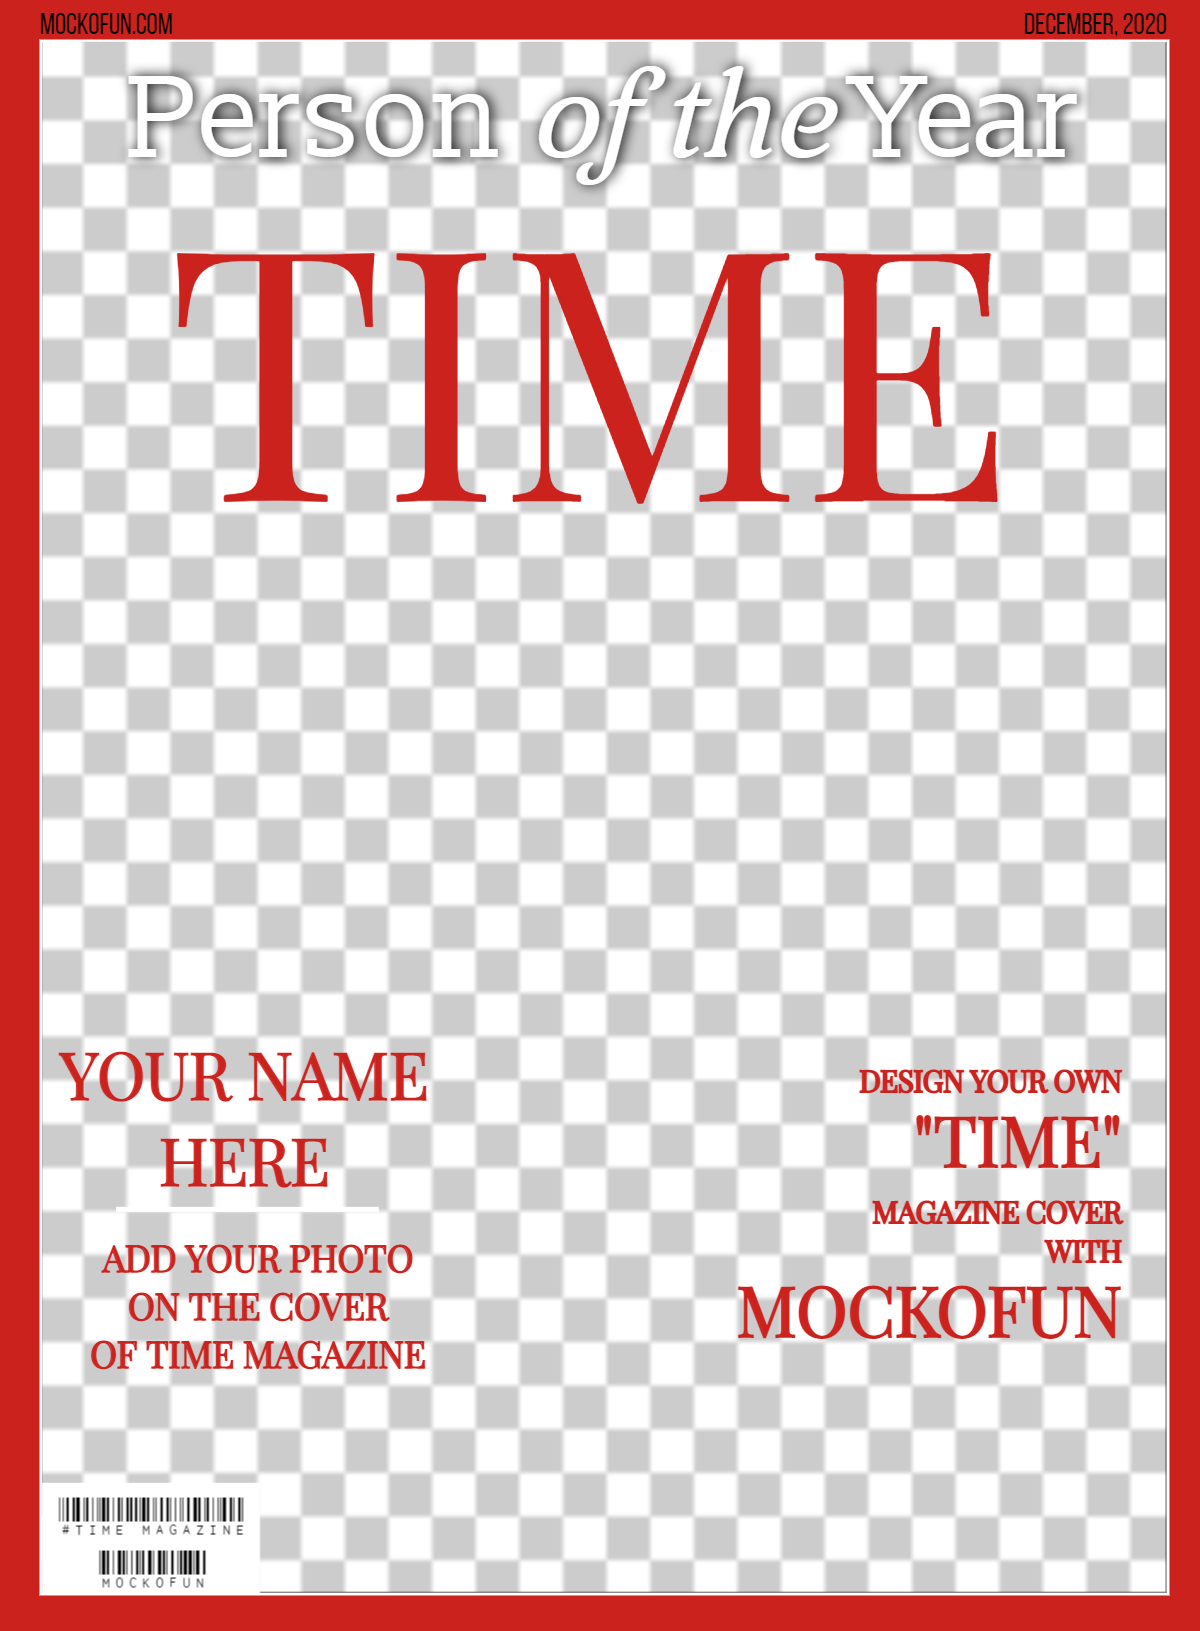 FREE Time Magazine Cover Template MockoFUN